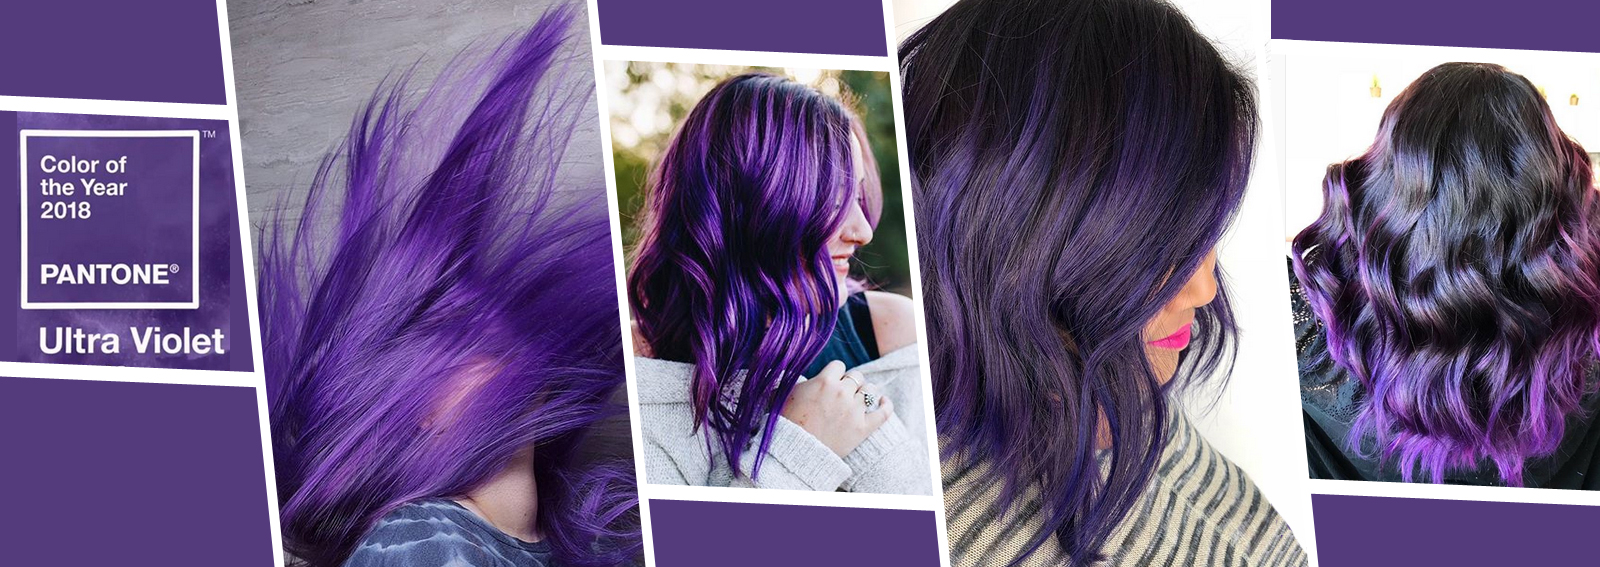 Ultra Violet hair i capelli viola 2018 nel colore Pantone DESKTOP_ultraviolet